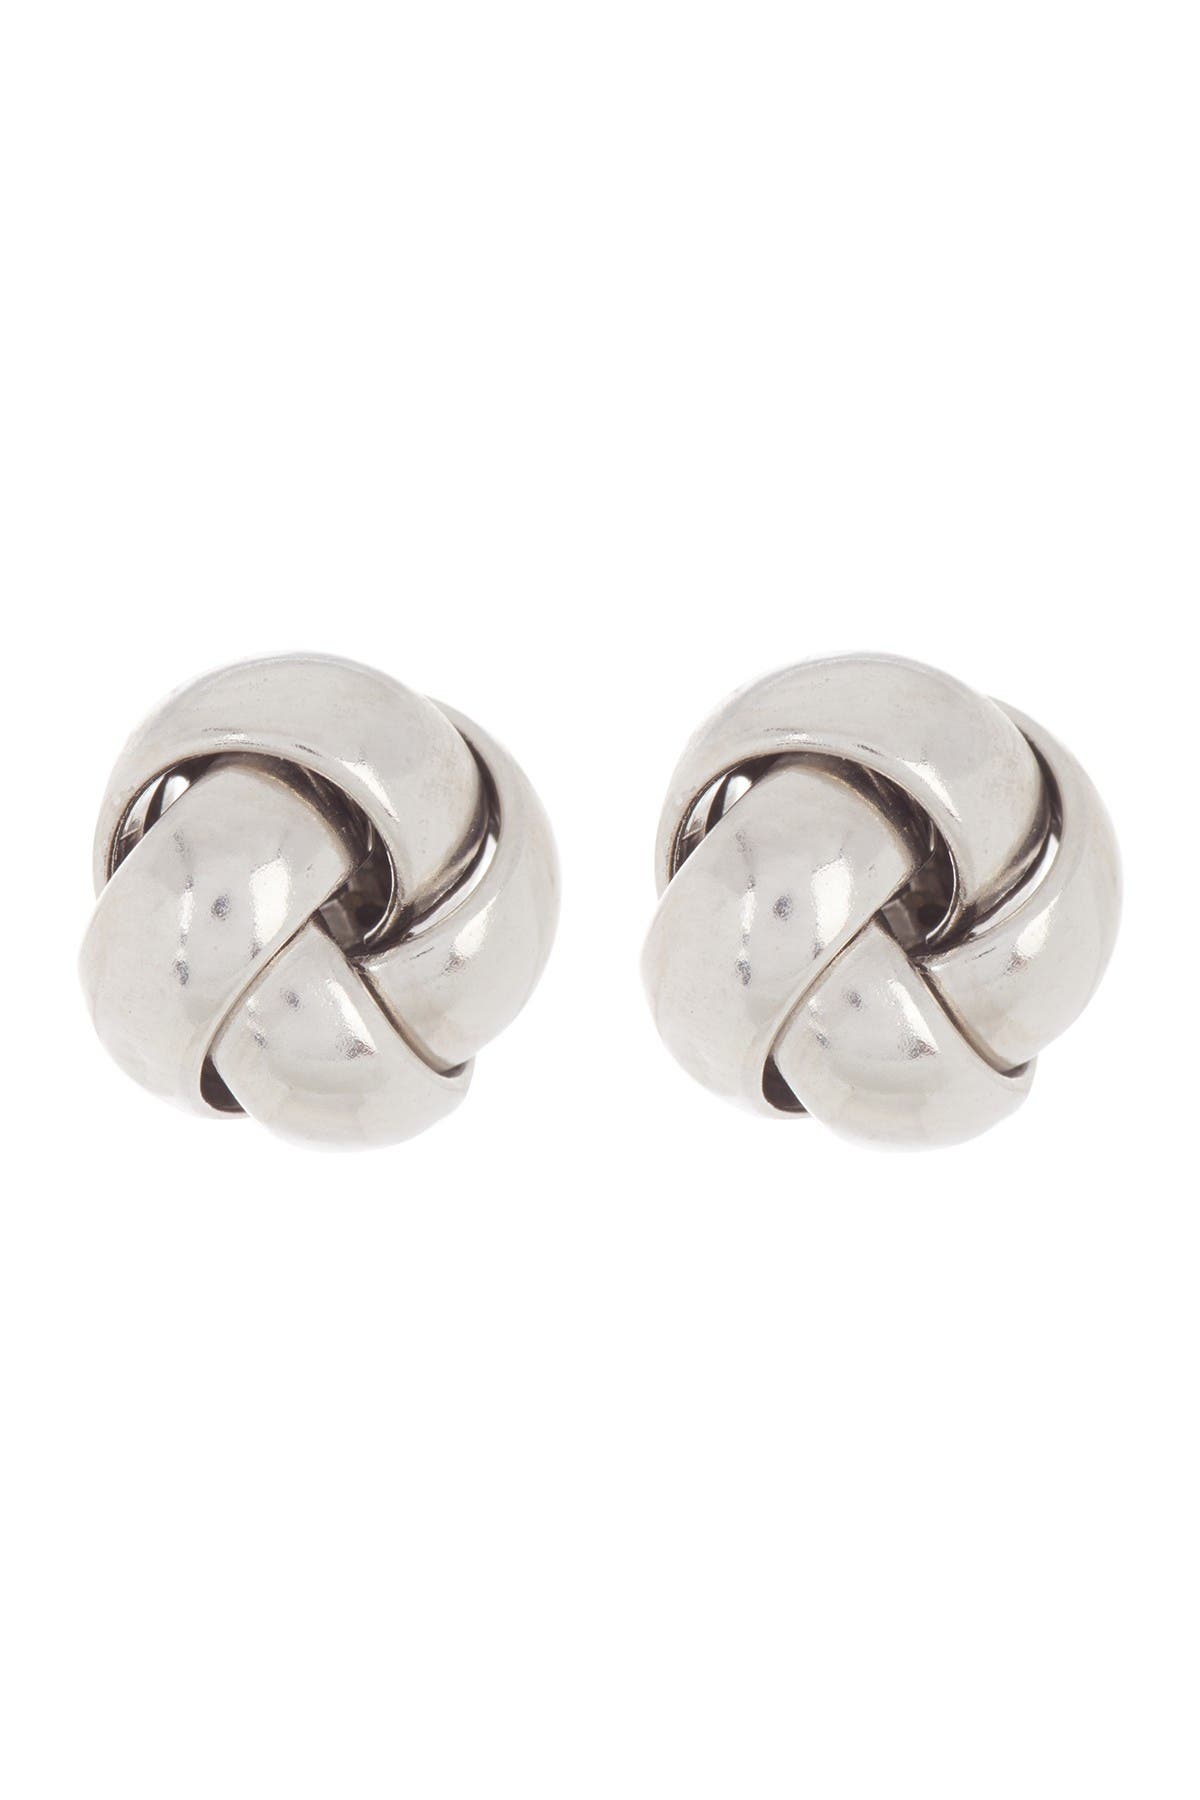 GLORIA Small Stud Earrings Silver Coin Earrings Silver Disc Earrings Gold Plated Disc Studs Gold Coin Earrings Textured Earrings